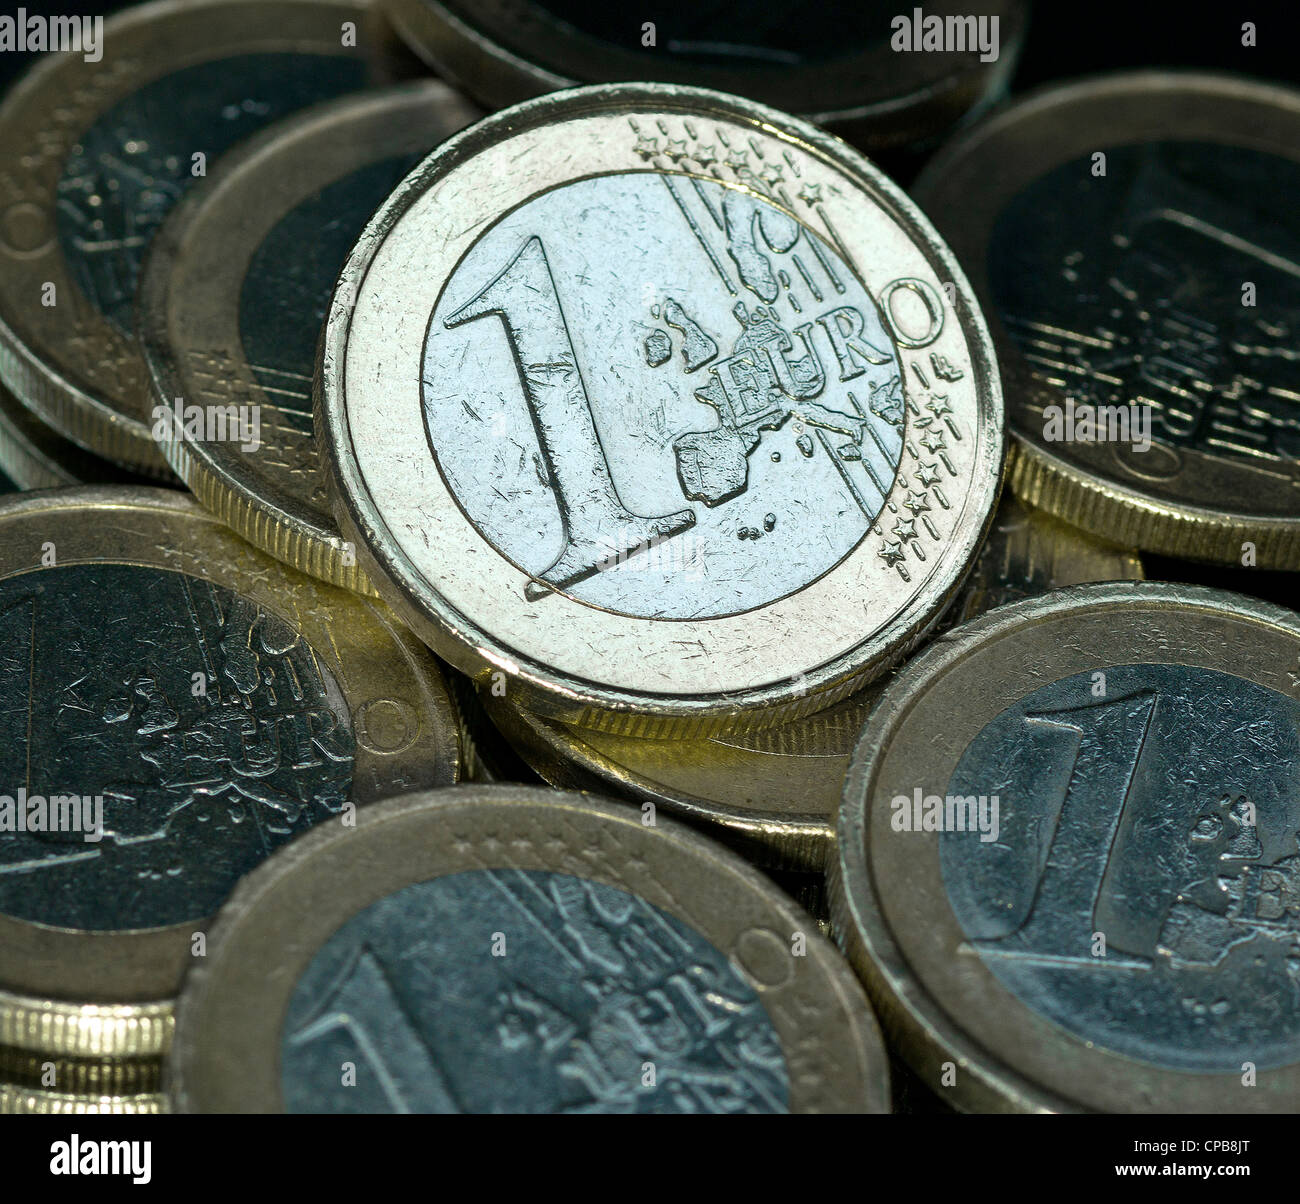 currency devaluation Euro Euroabwertung Bank depreciation inflation Stock Photo